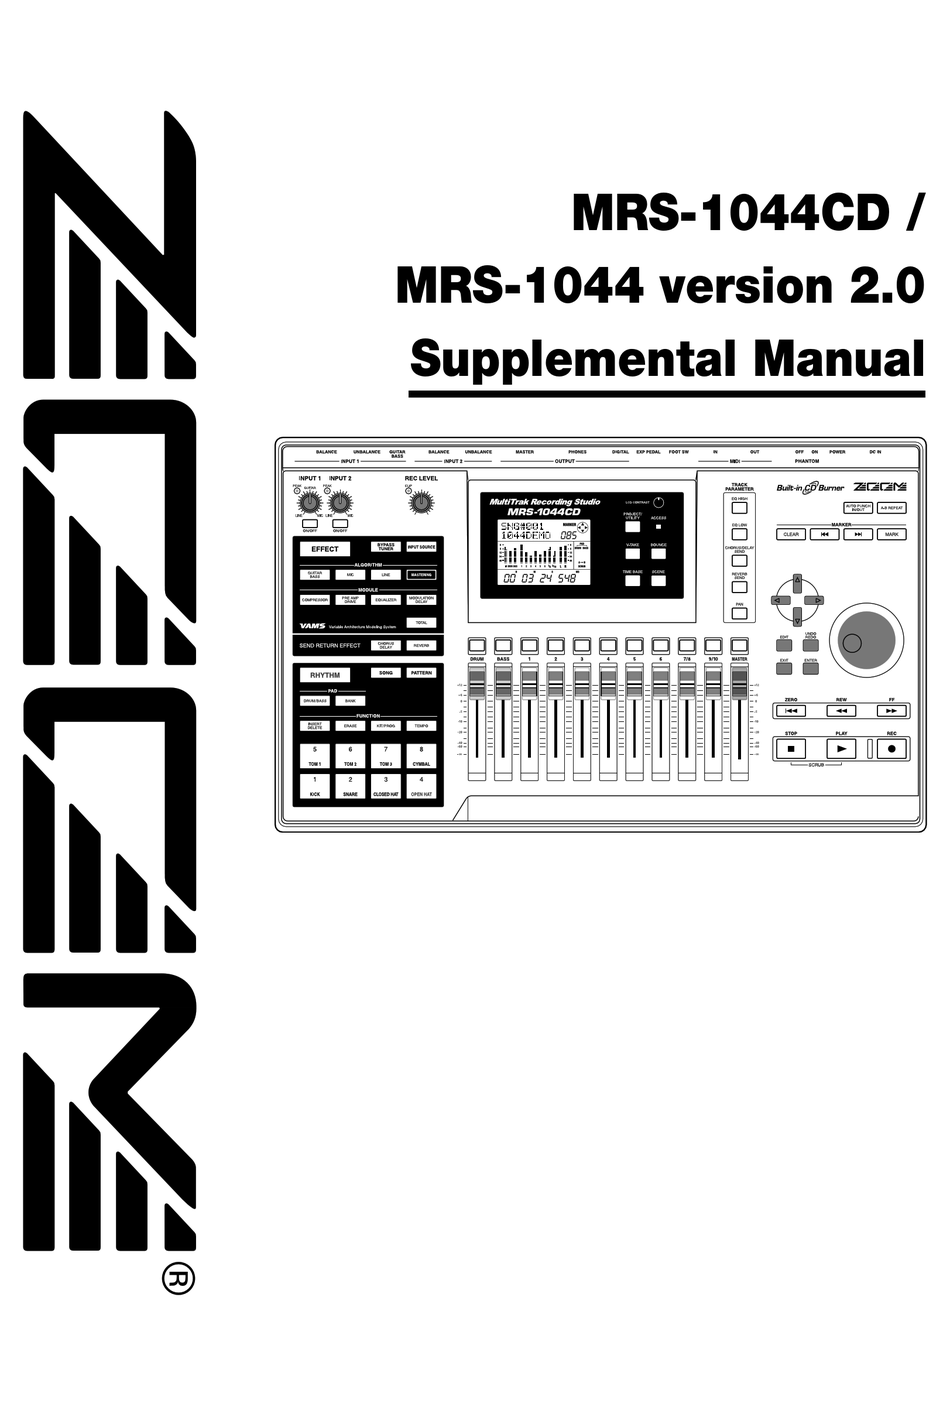 ZOOM MRS-1044CD SUPPLEMENTAL MANUAL Pdf Download | ManualsLib